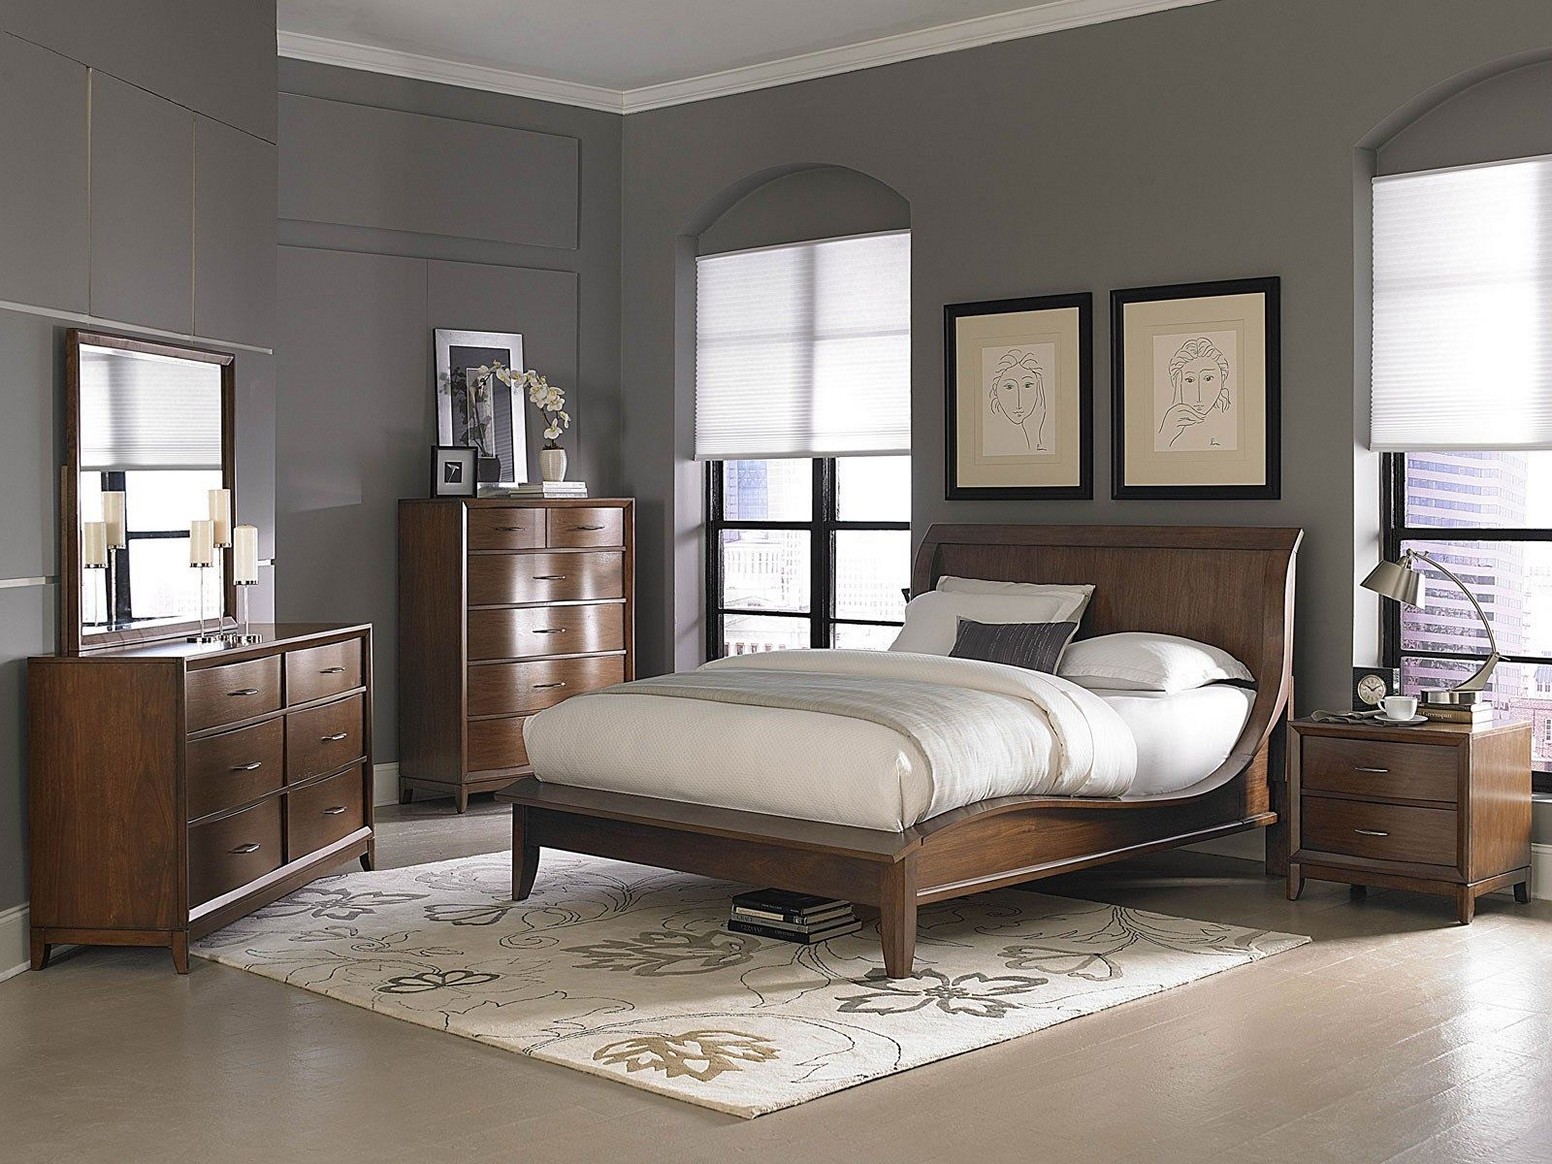 Large bedroom furniture ideas Hawk Haven